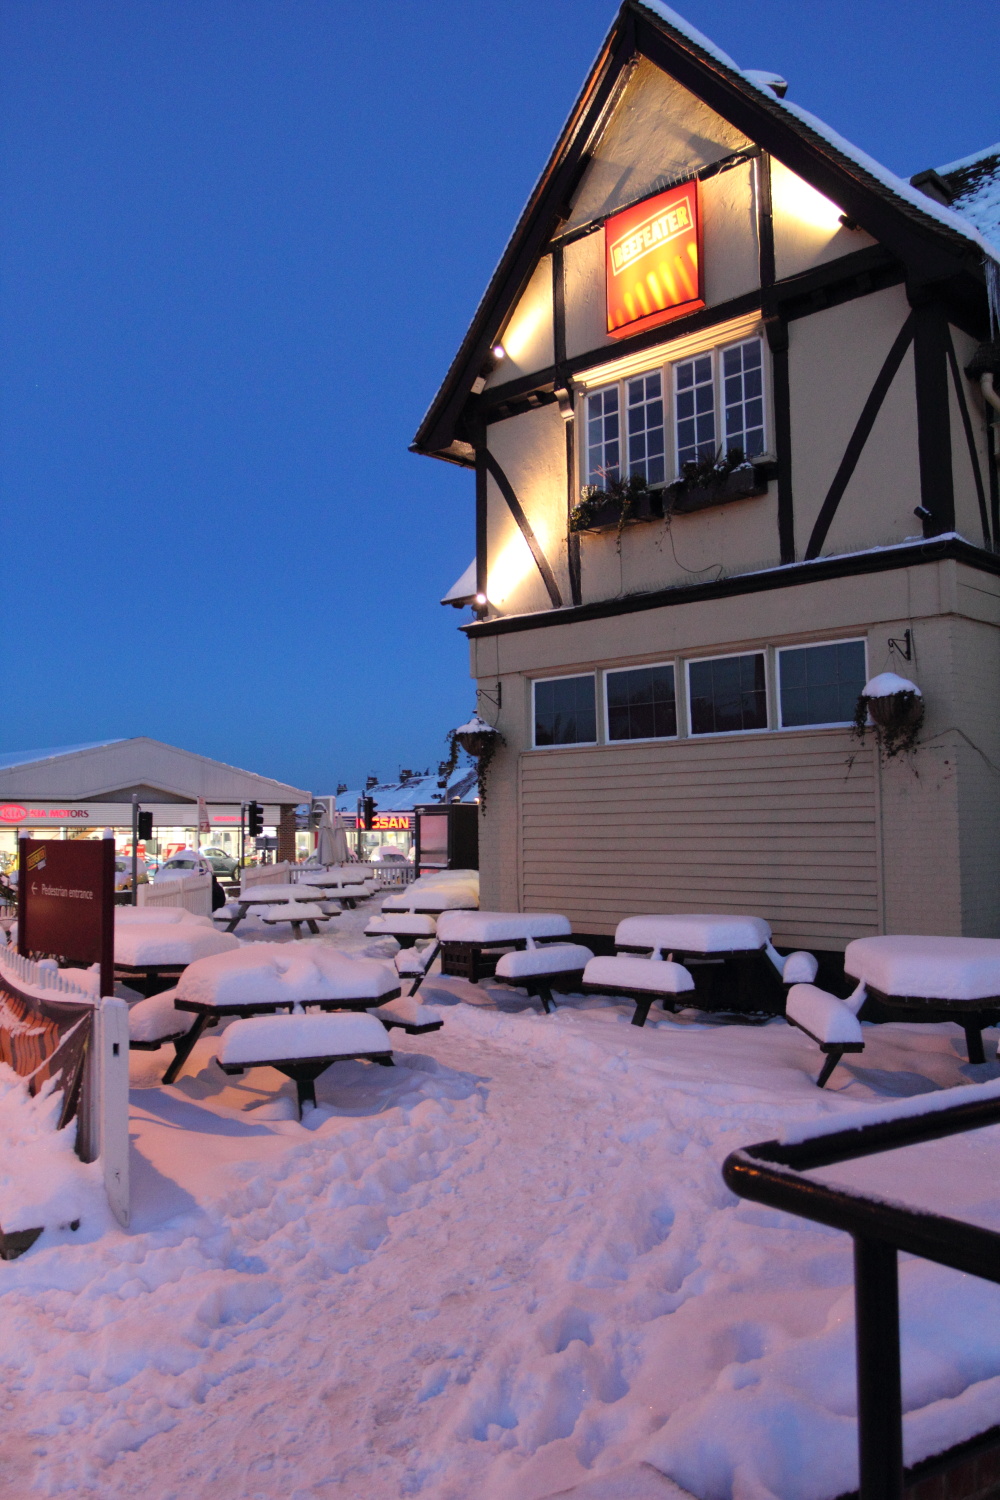 Manor Farm Beefeater Pub Restaurant in snow 2010